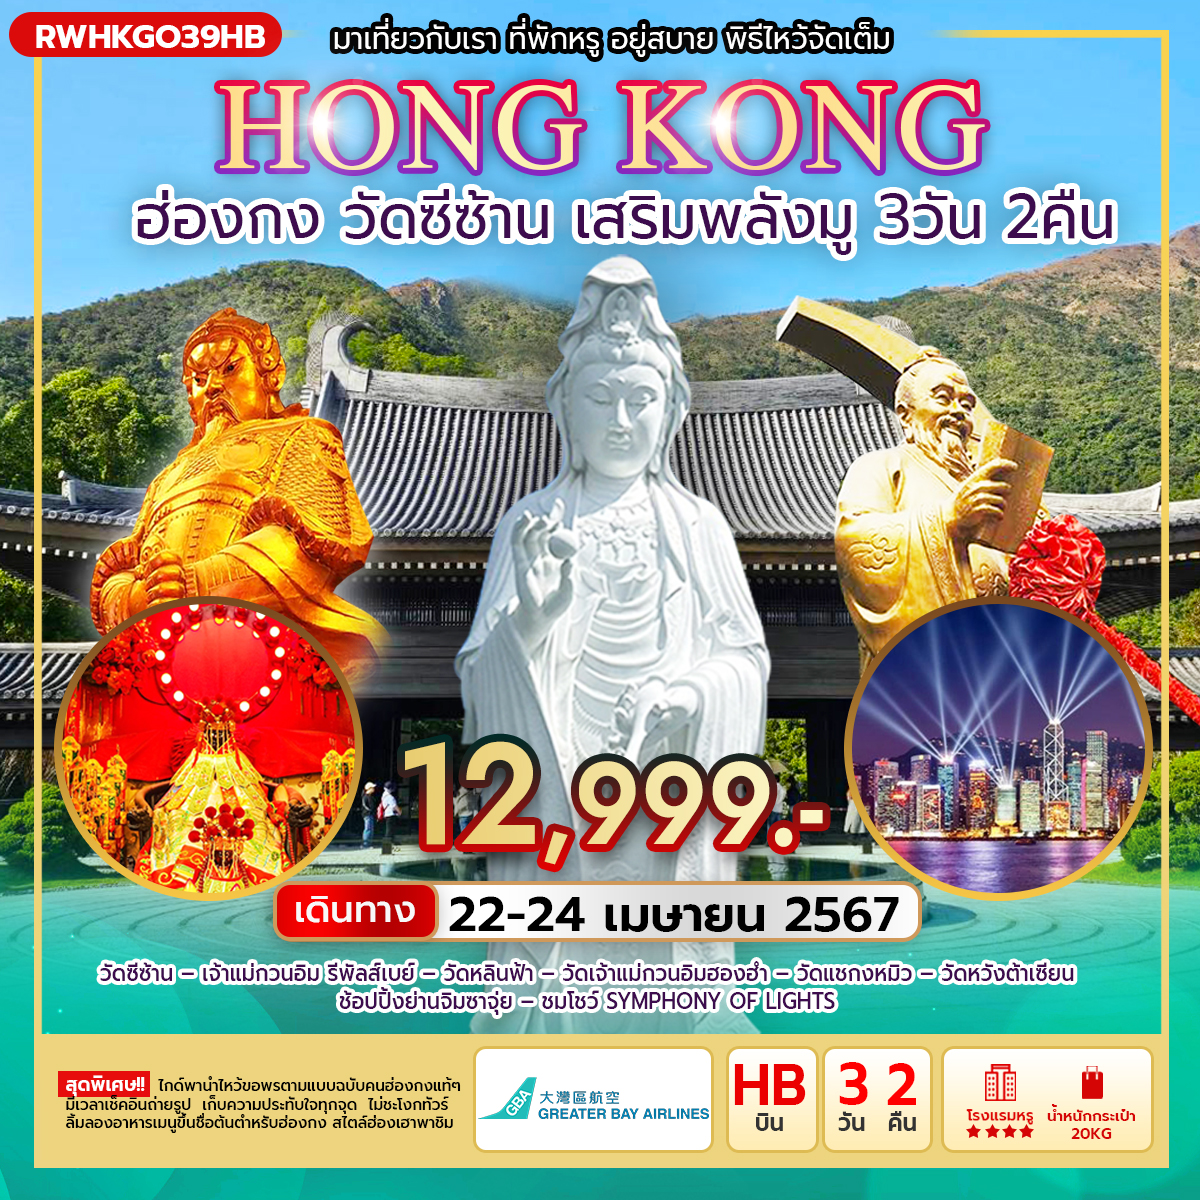 HONG KONG ฮ่องกง วัดซีซ้าน เสริมพลังมู 3D2N by HB